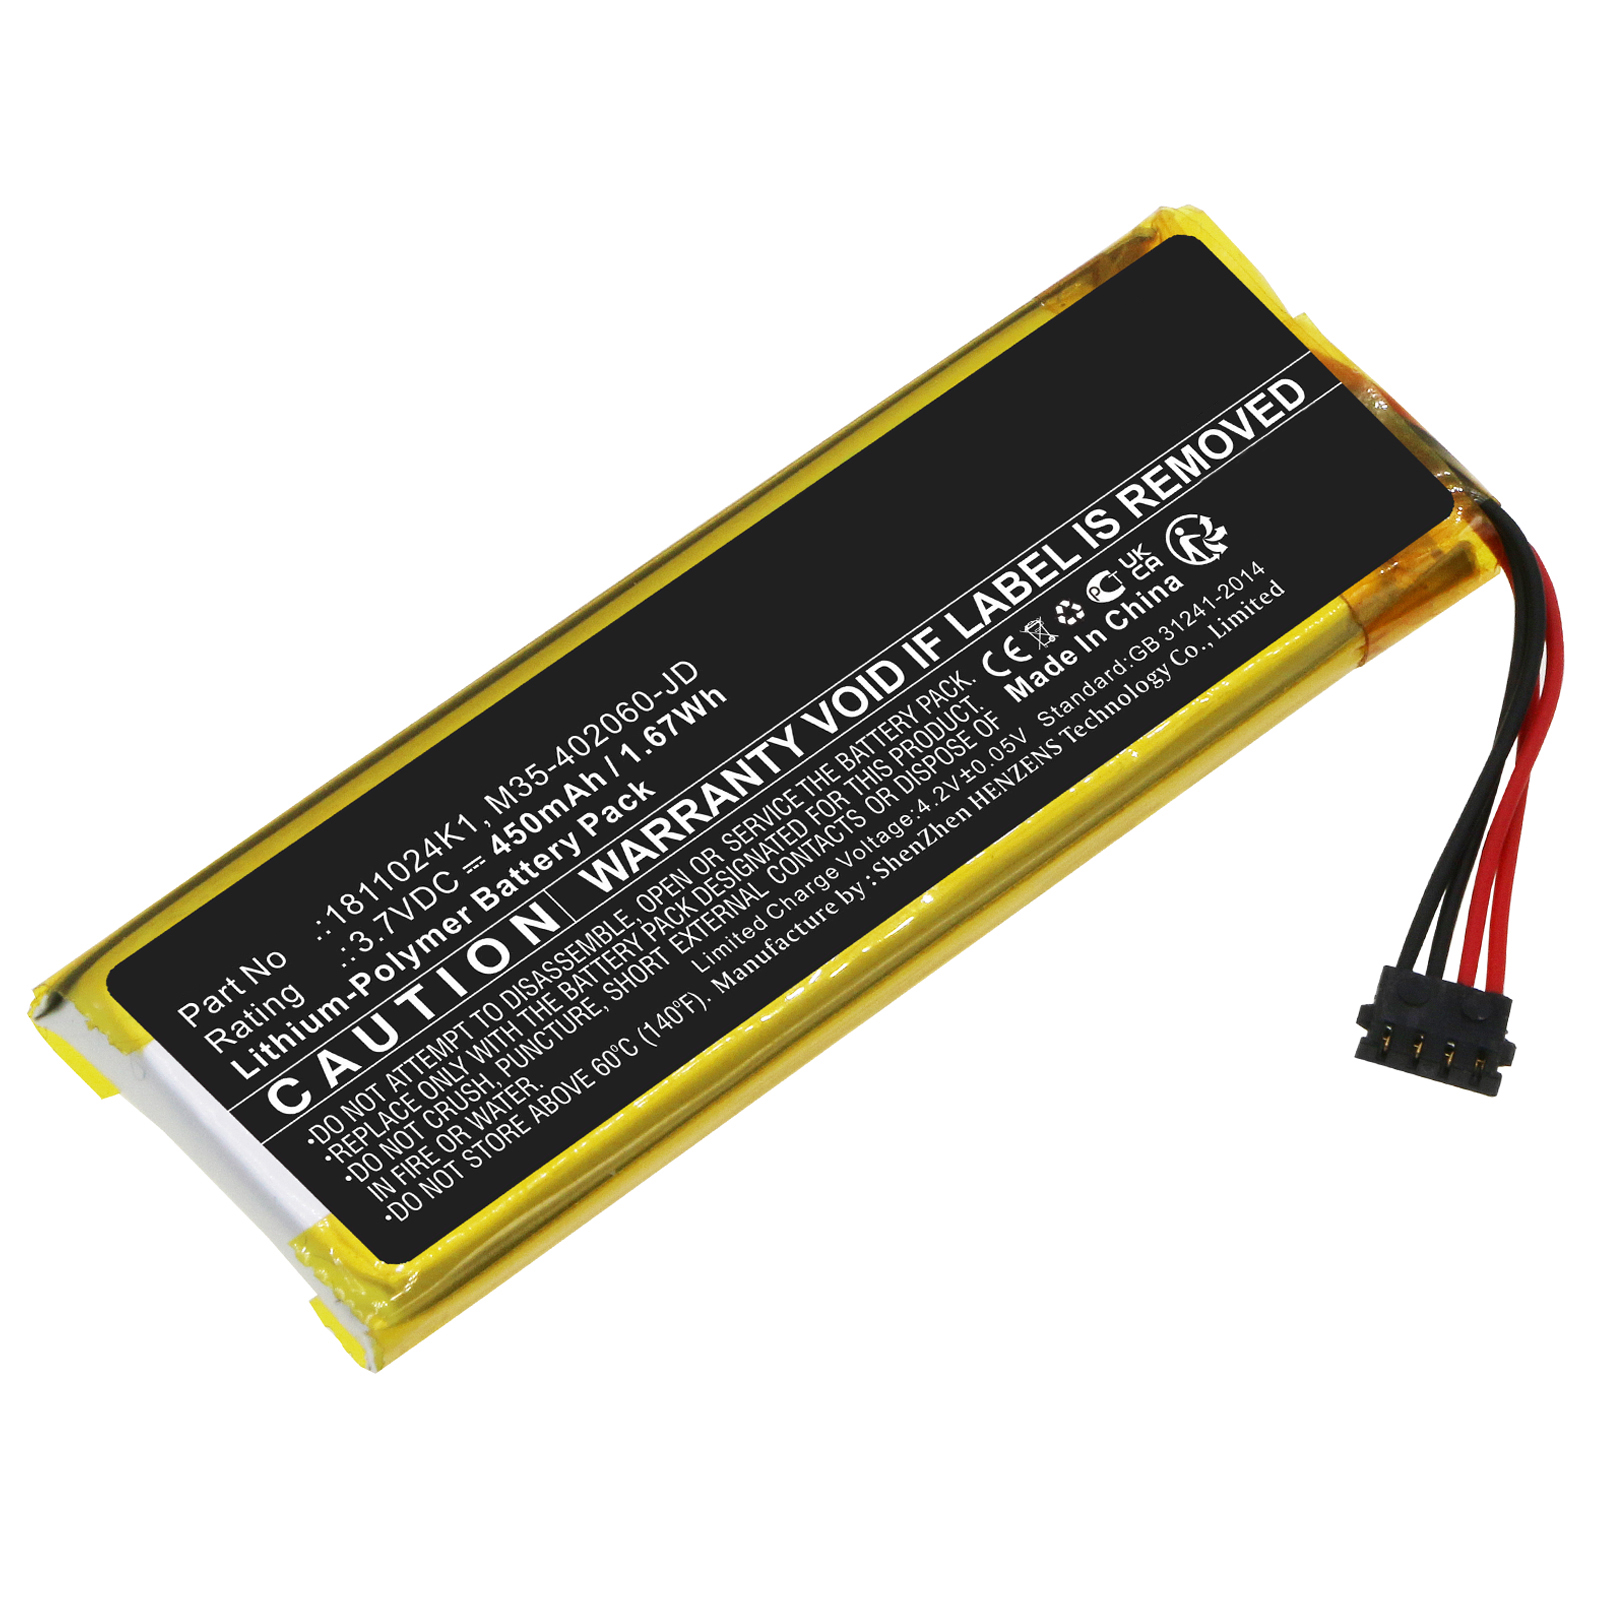 Synergy Digital Credit Card Reader Battery, Compatible with Ingenico 1811024K1 Credit Card Reader Battery (Li-Pol, 3.7V, 450mAh)